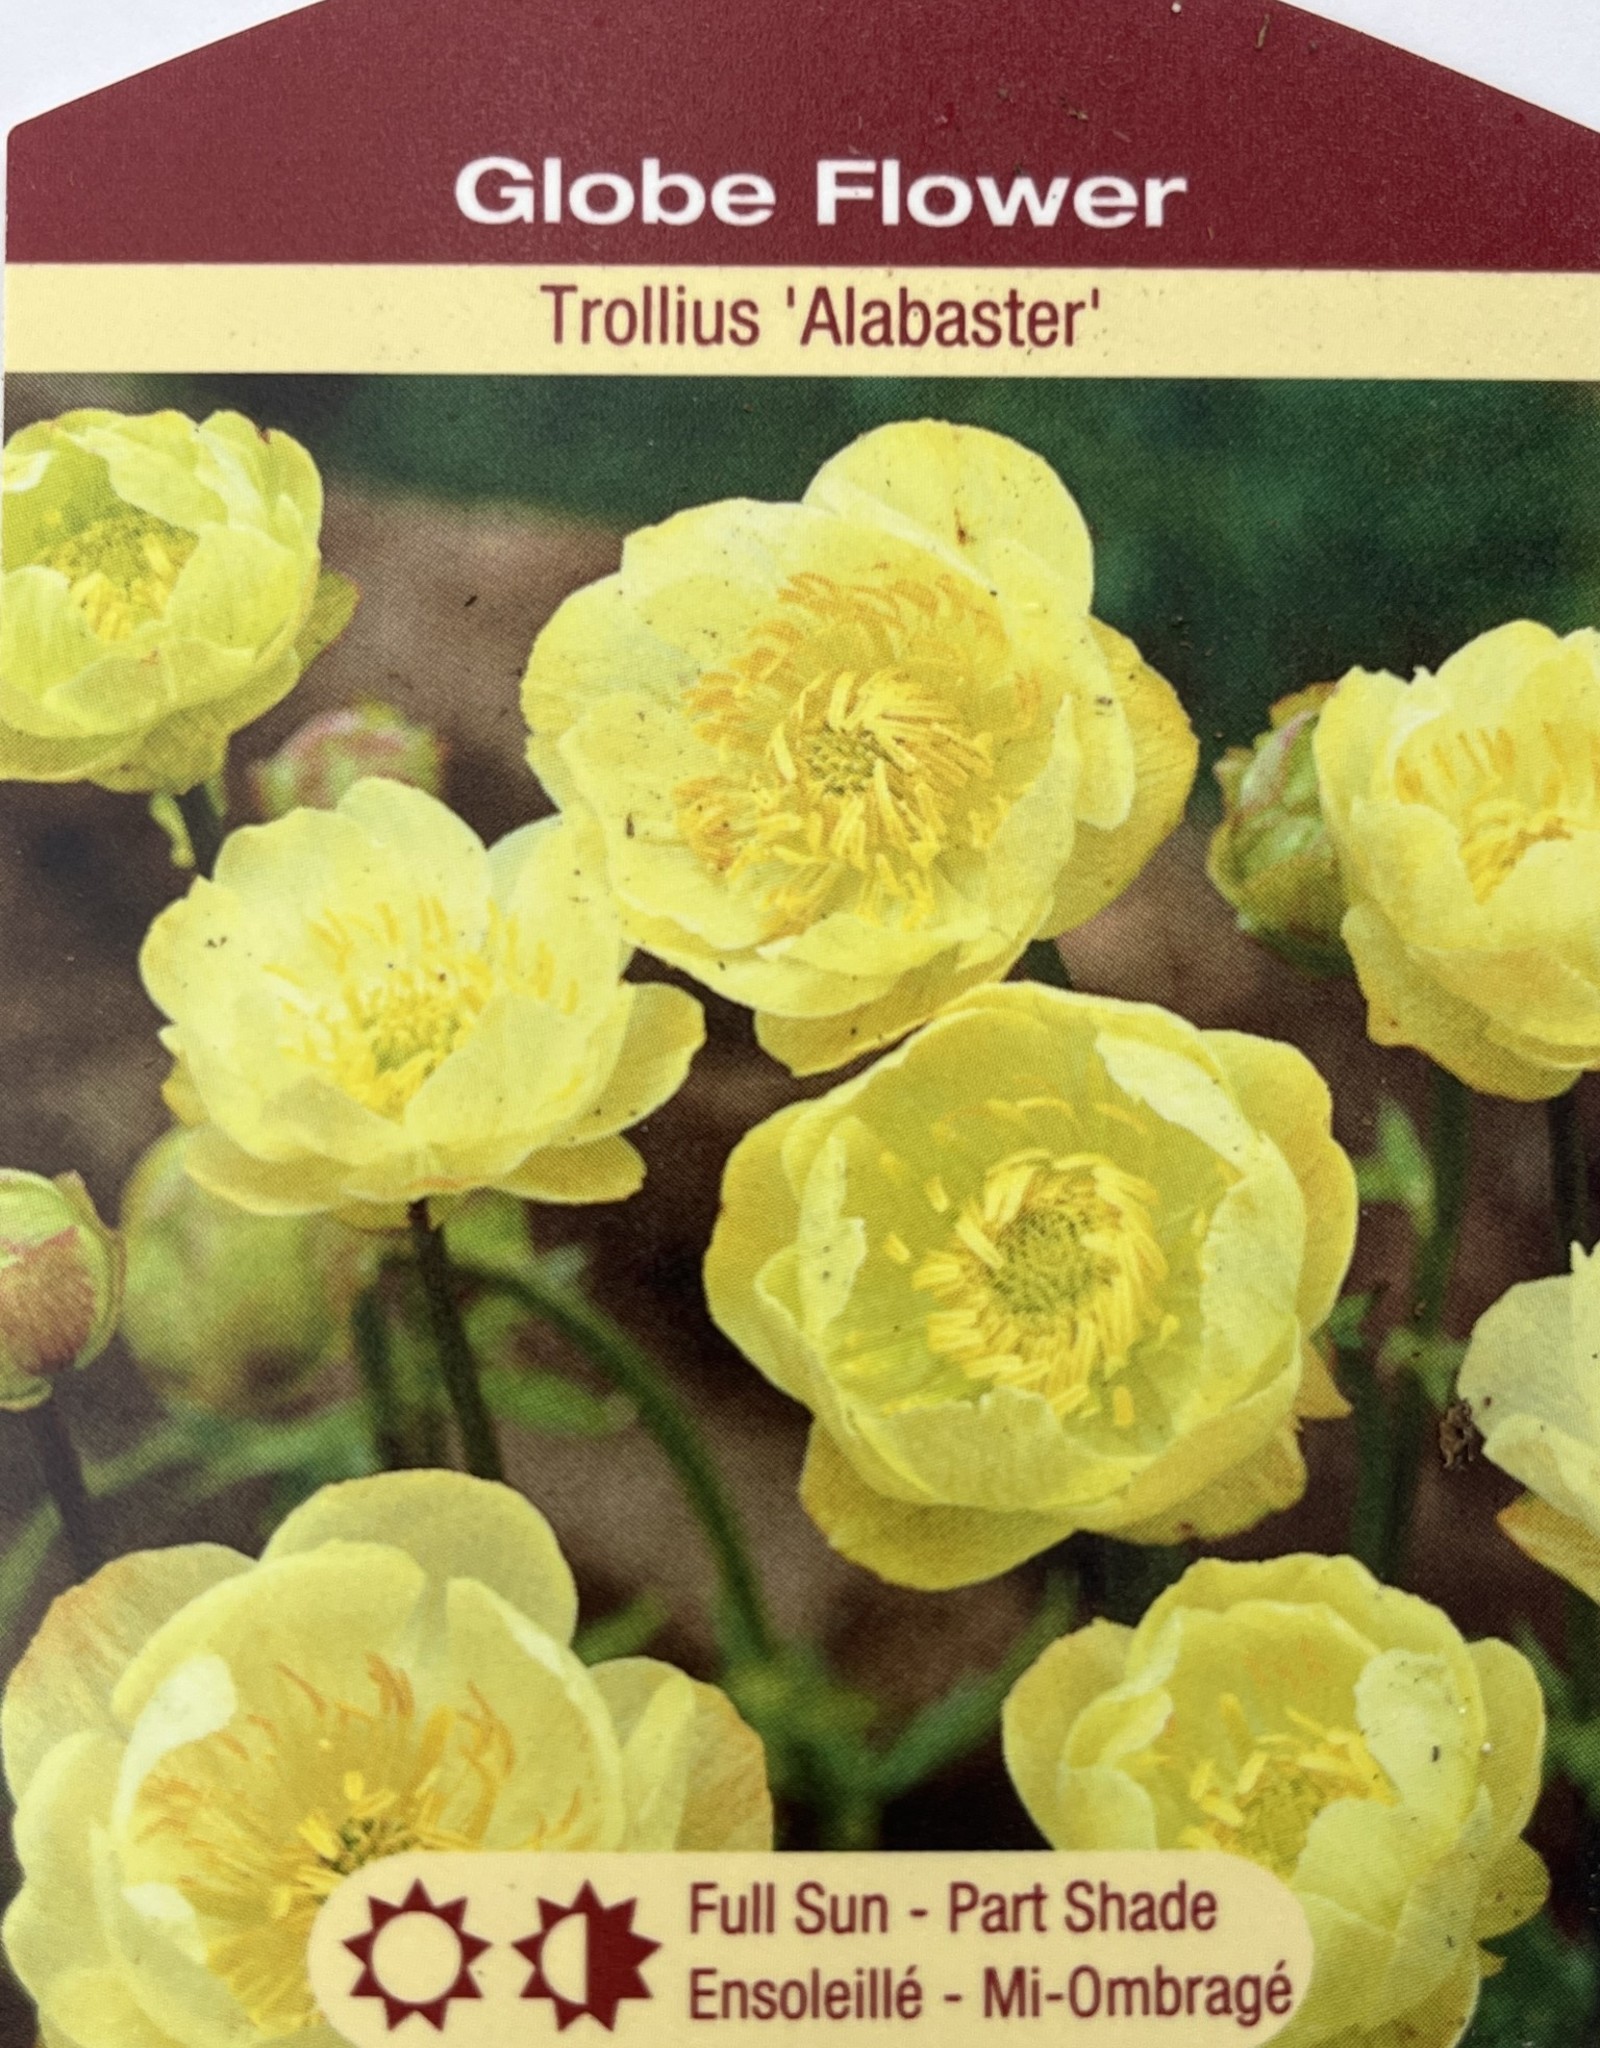 Trollius - Globe Flower - Alabaster 1 gal